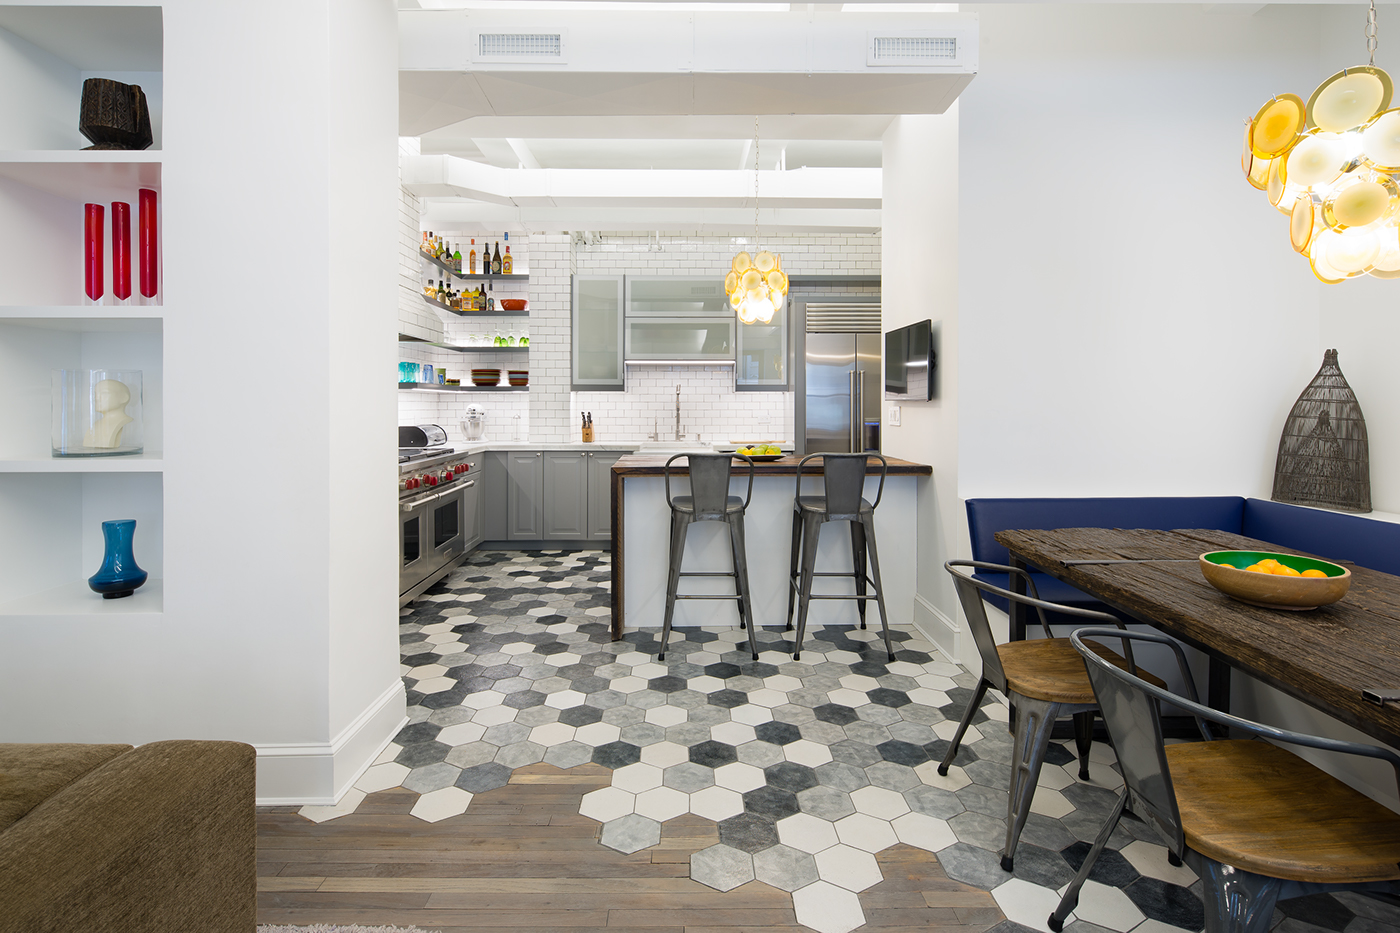 LOFT bali renovation flatiron new york city NYC Loft kitchen tile